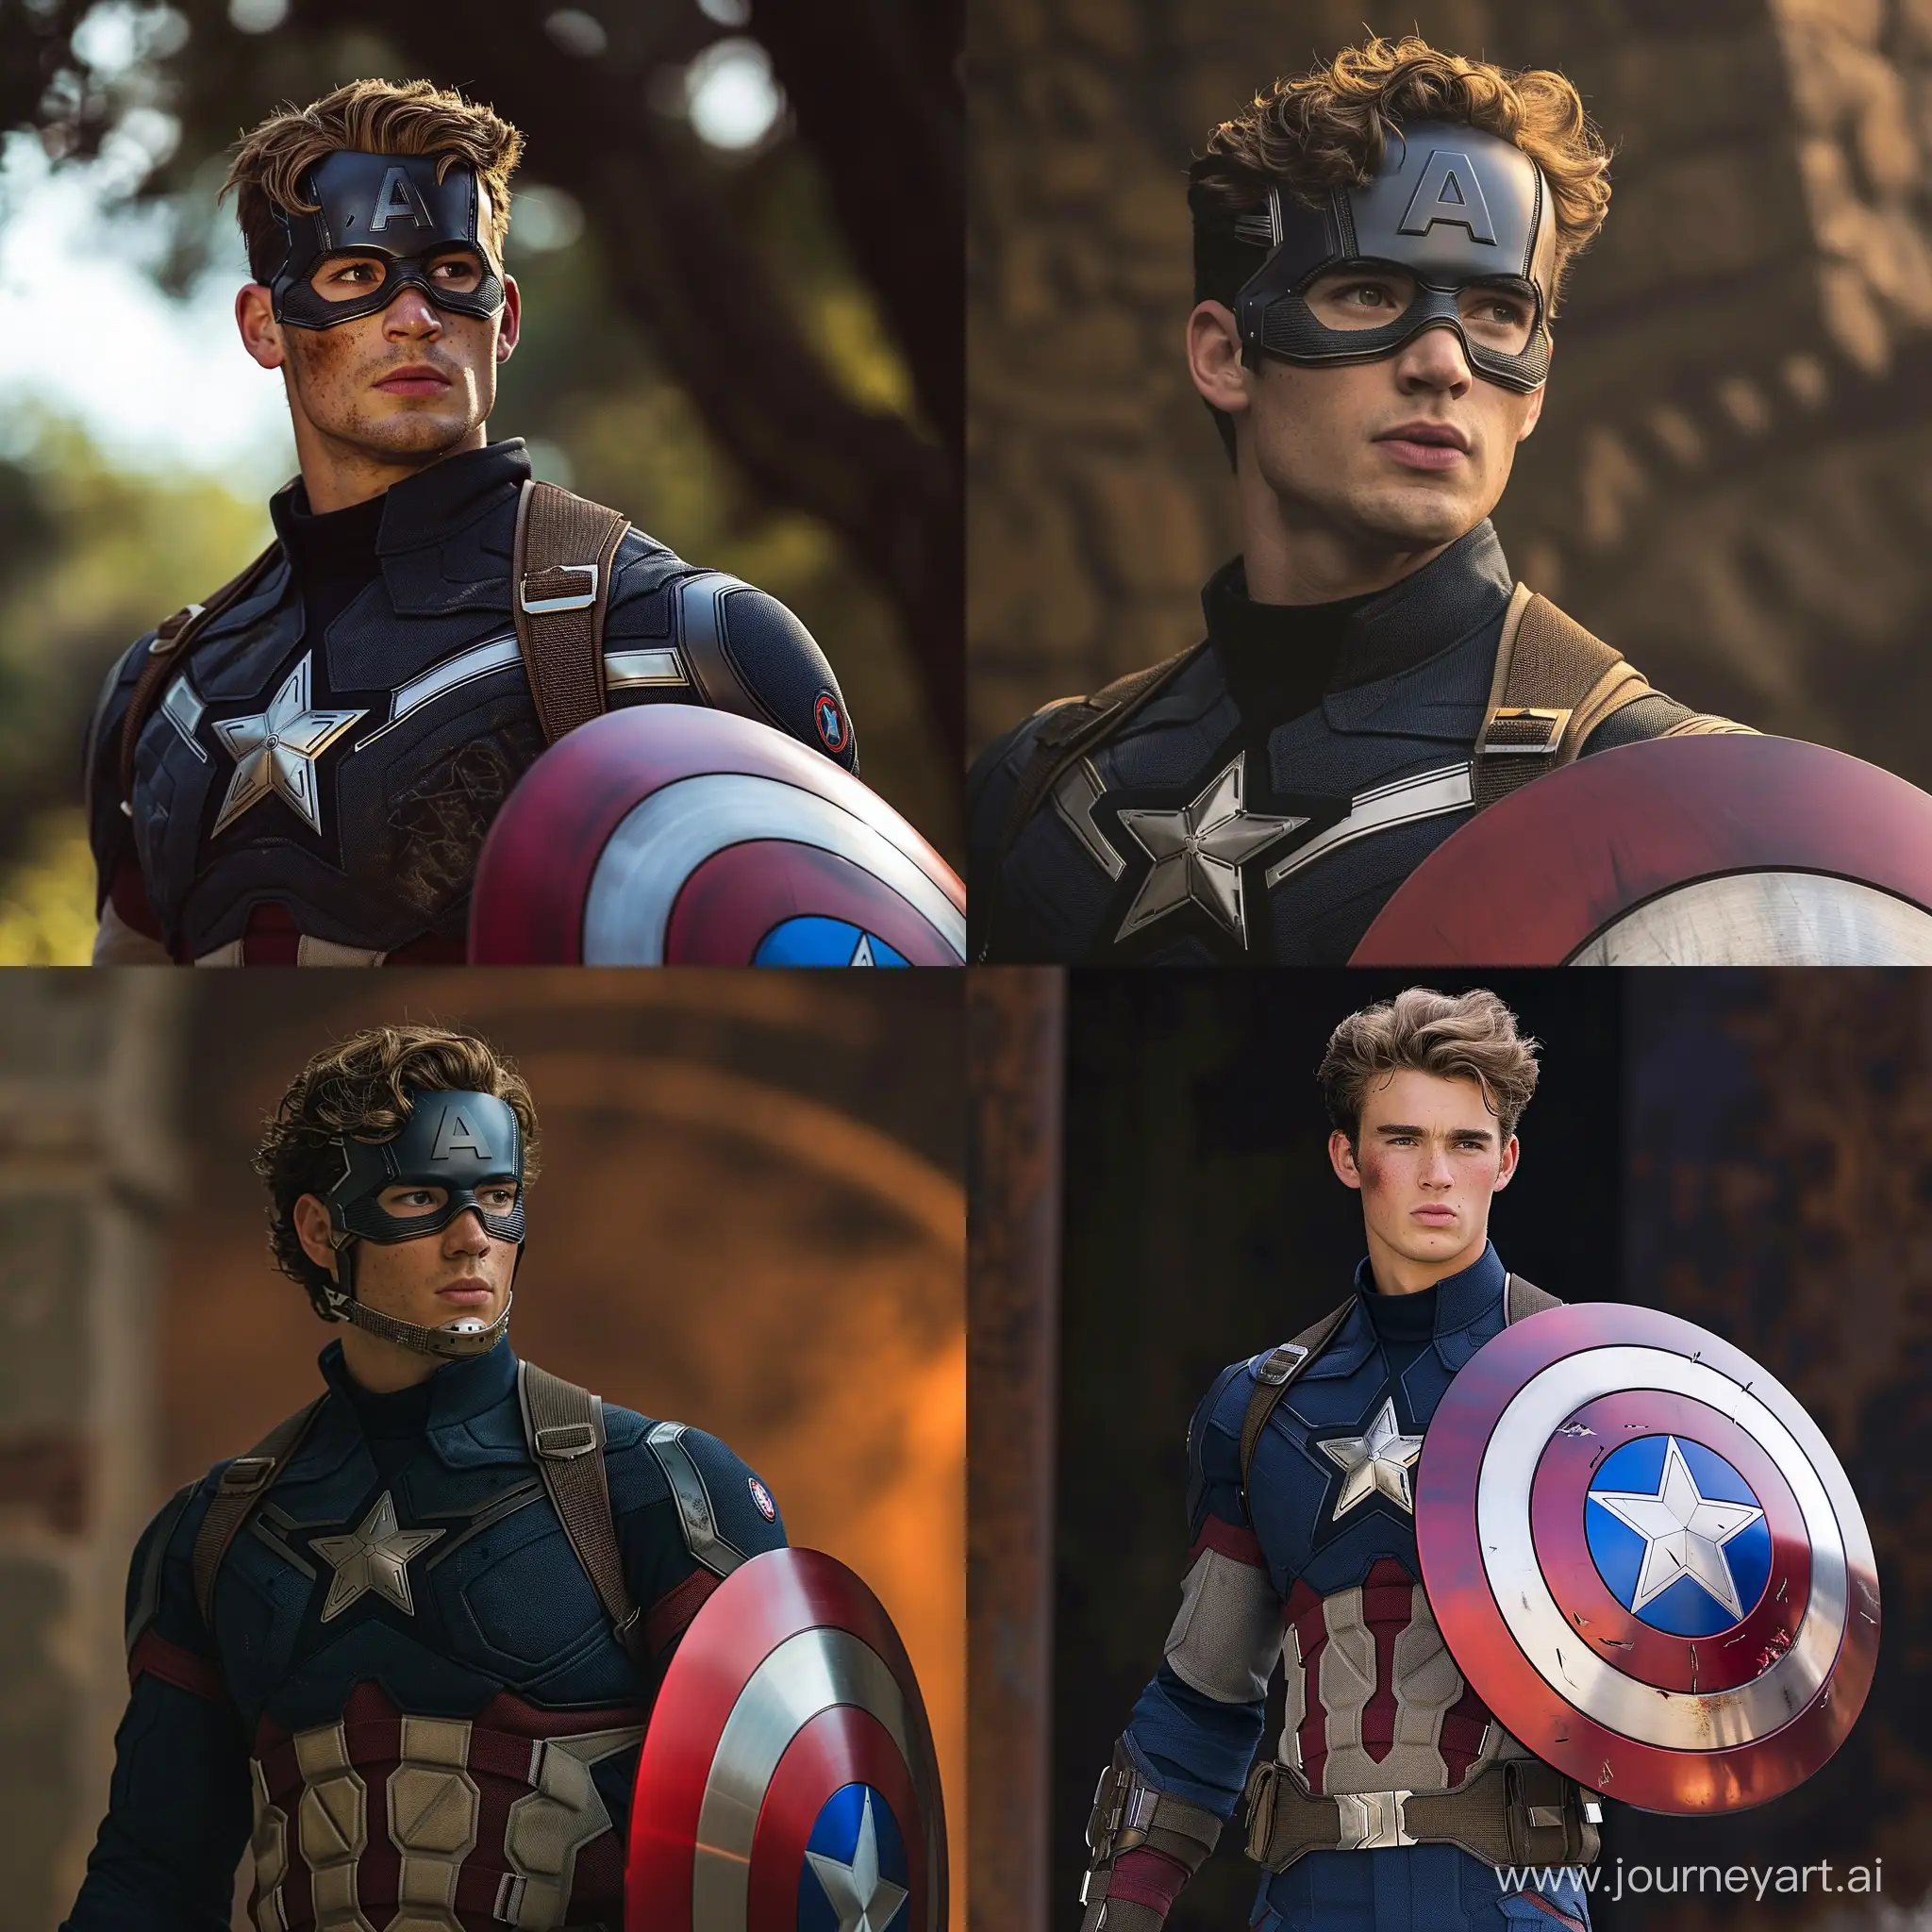 Brenton-Thwaites-Portrays-Captain-America-in-Striking-Imagery